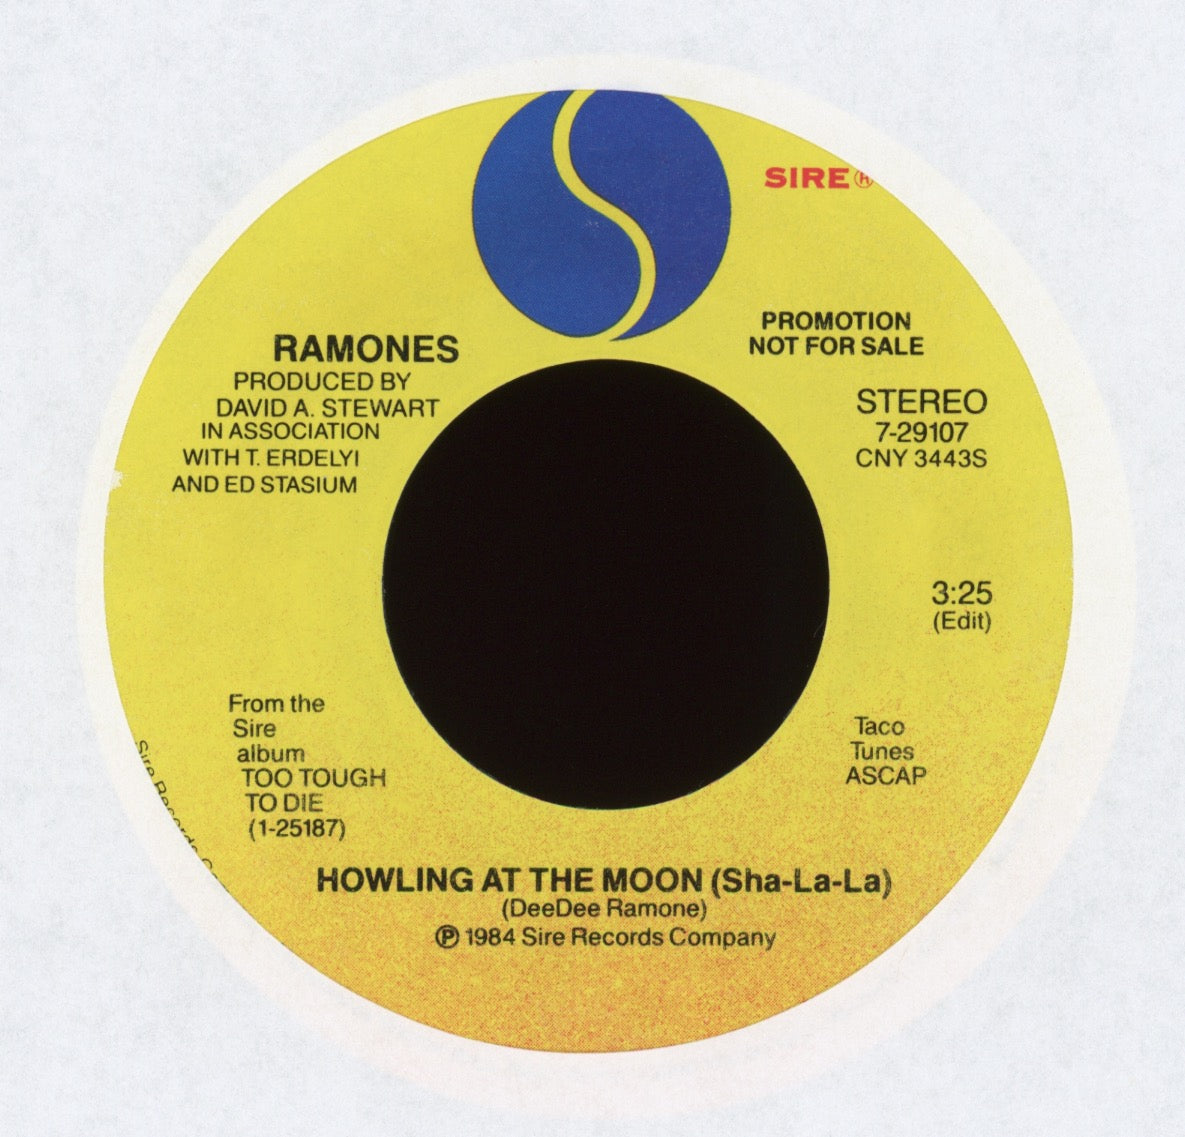 Ramones - Howling At The Moon (Sha-La-La) on Sire Promo